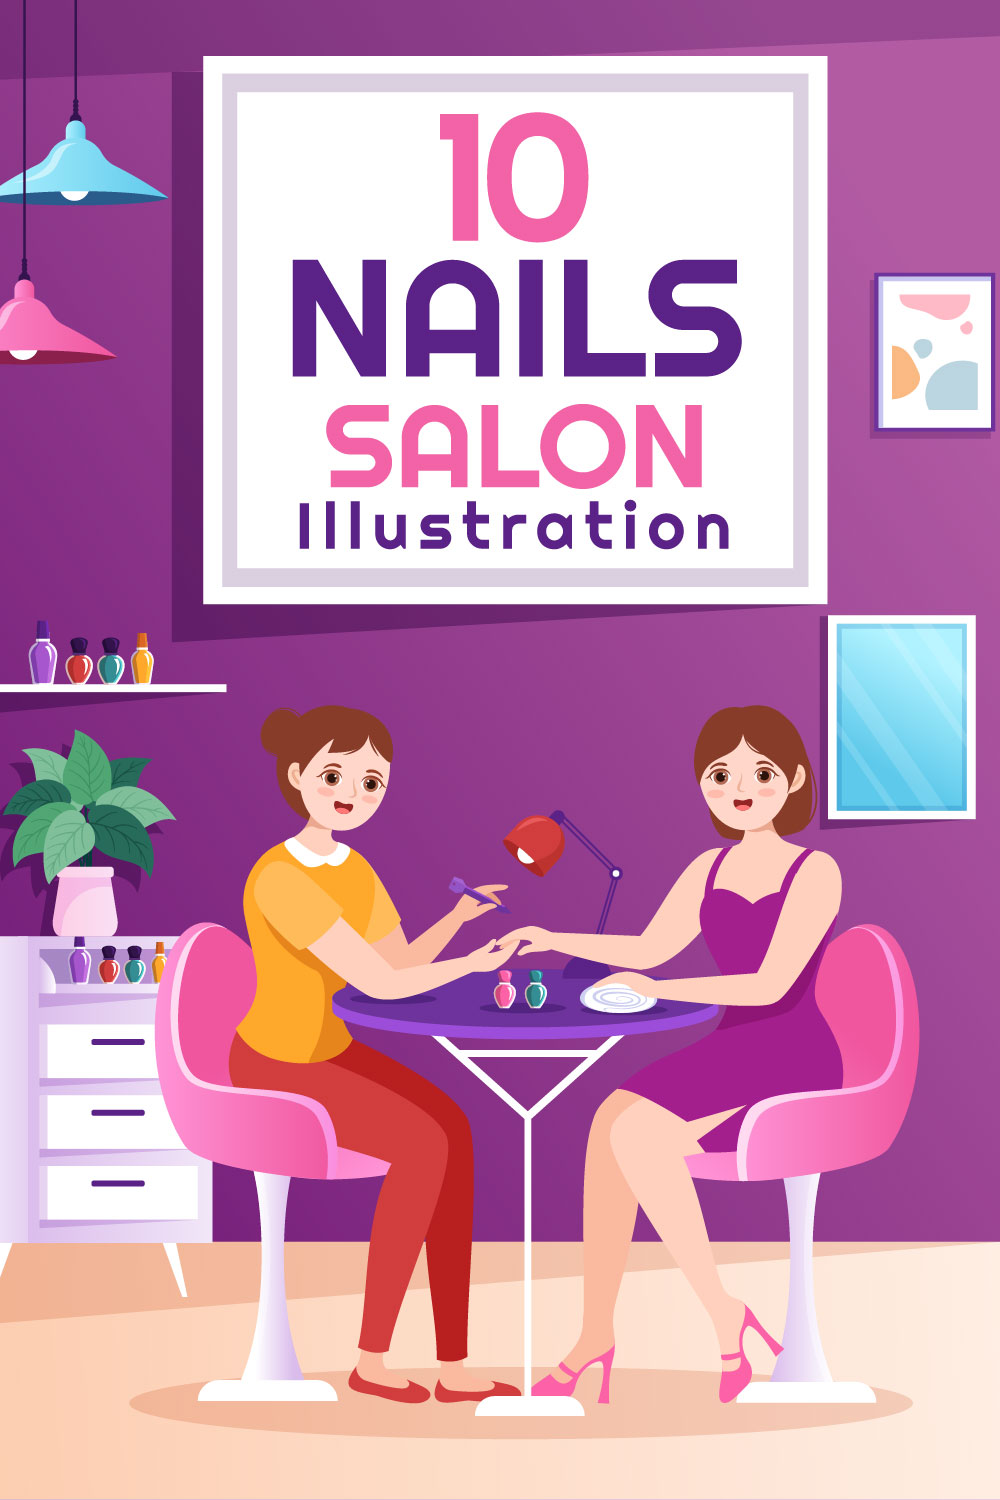 Nail Polish Salon Illustration Pinterest image.